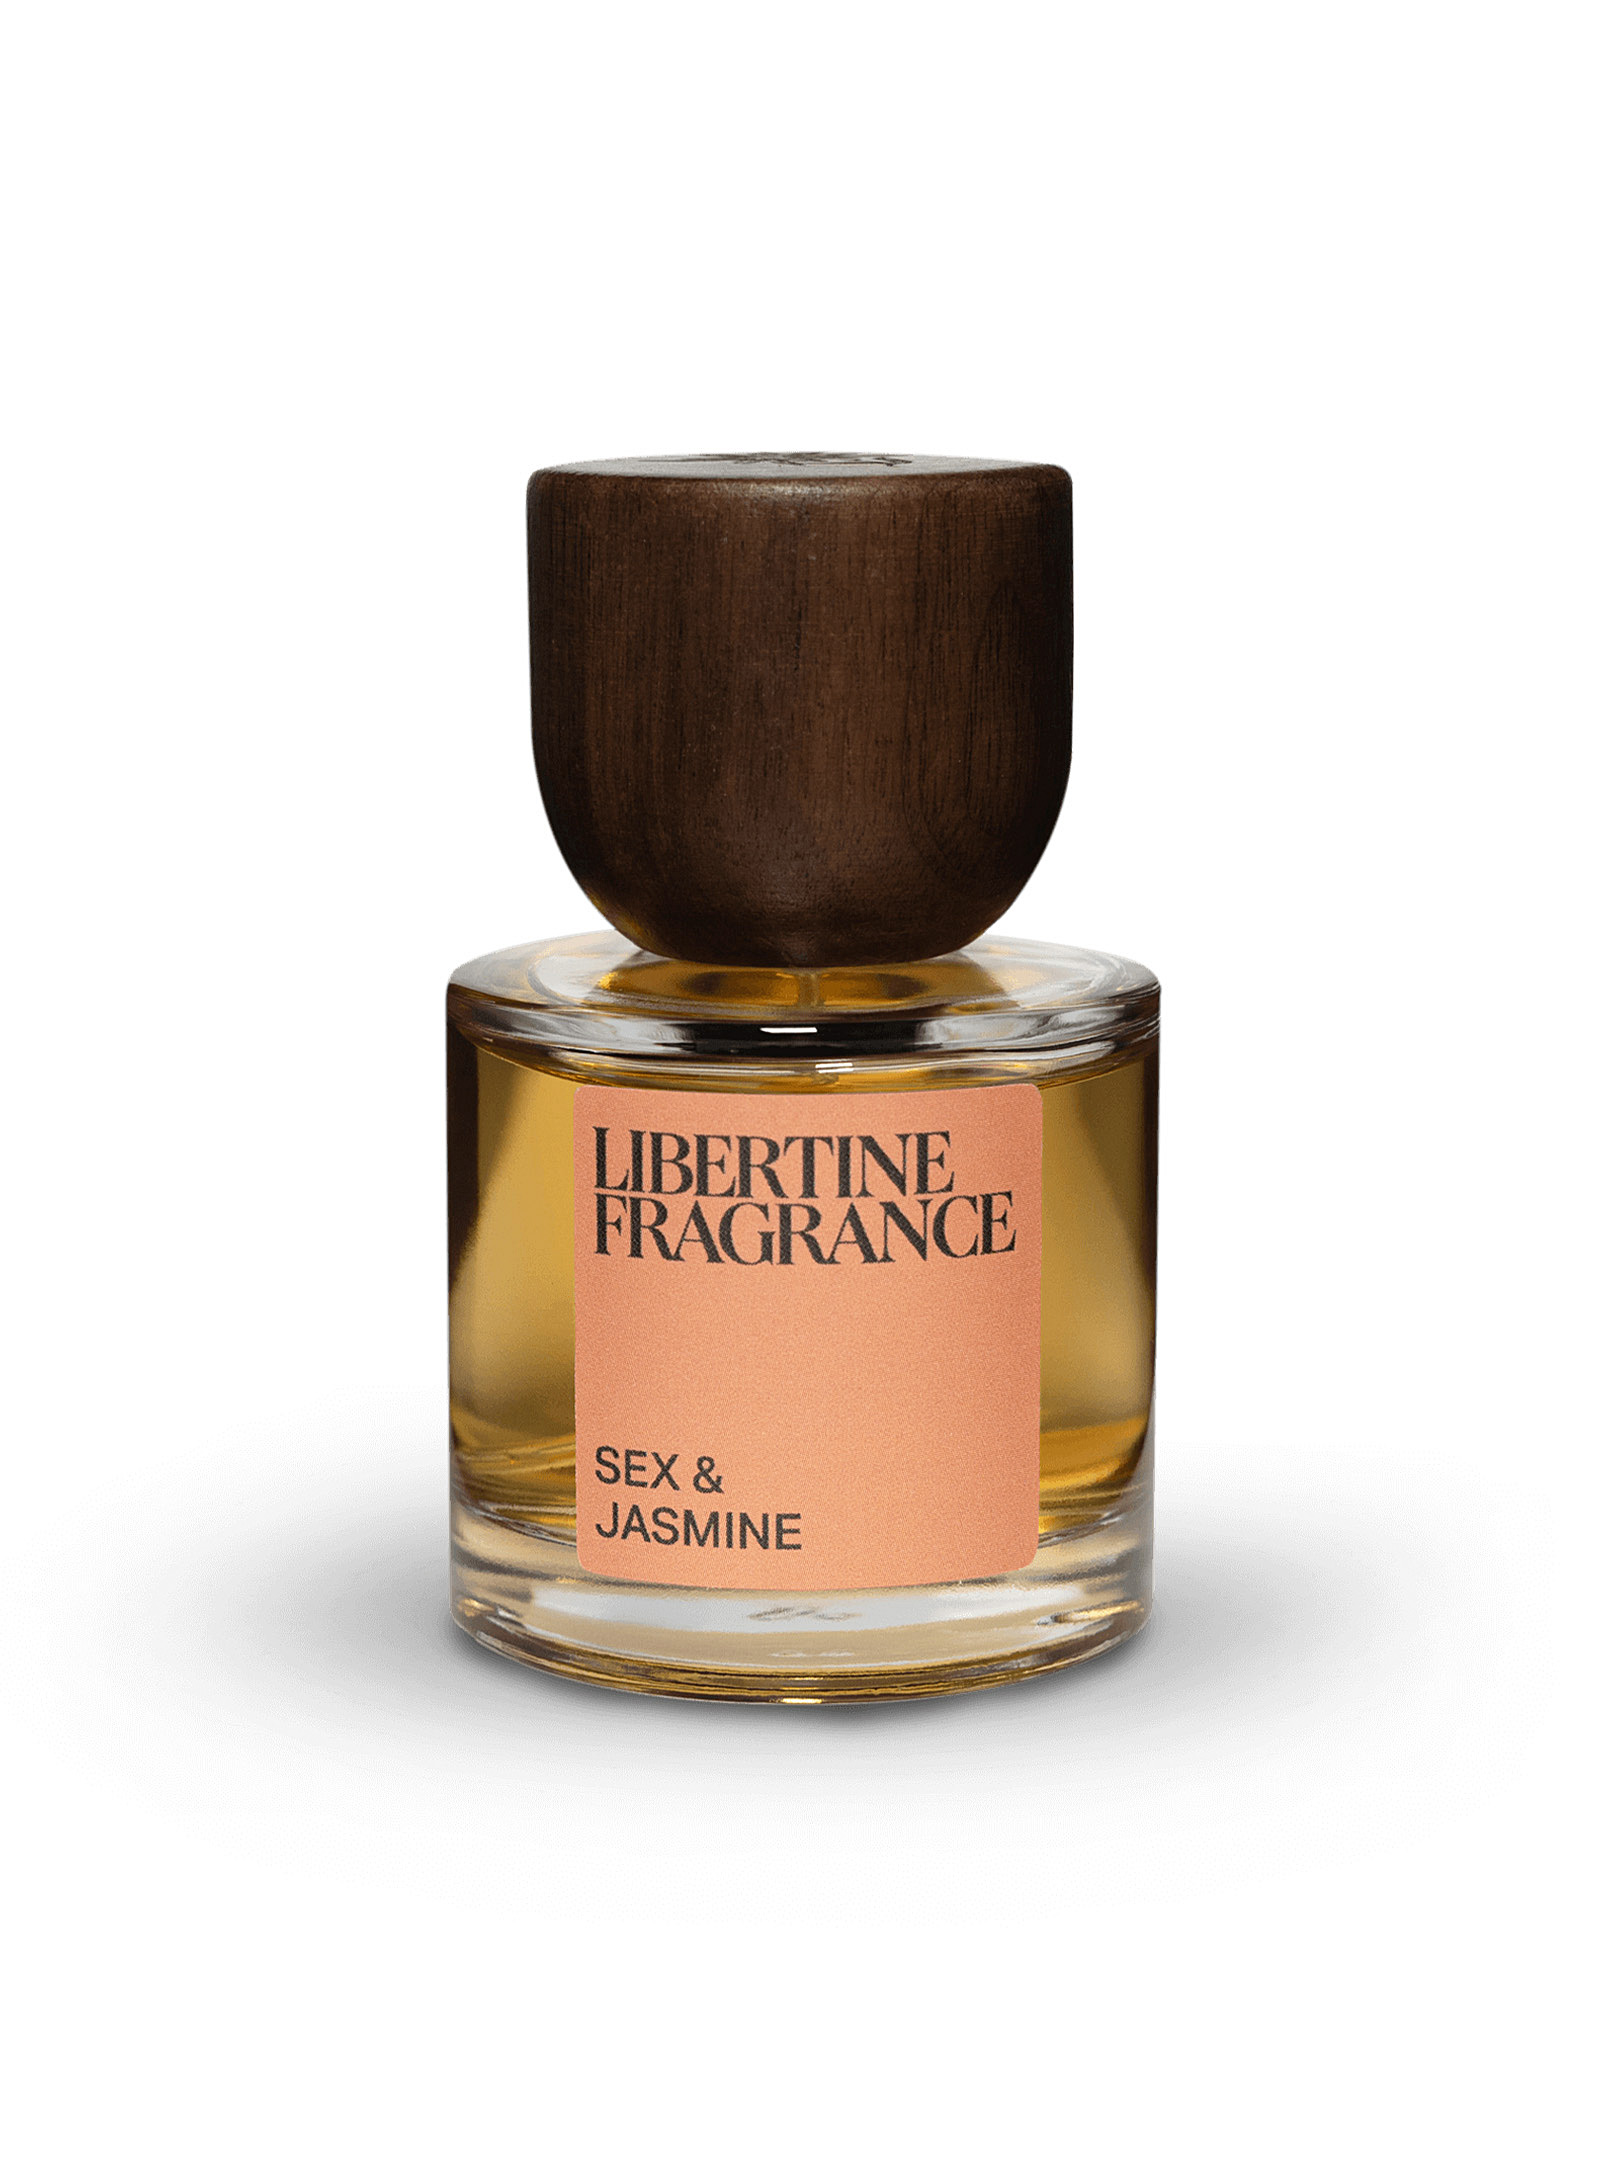 Libertine Fragrance - L'eau de parfum Sex  Jasmine